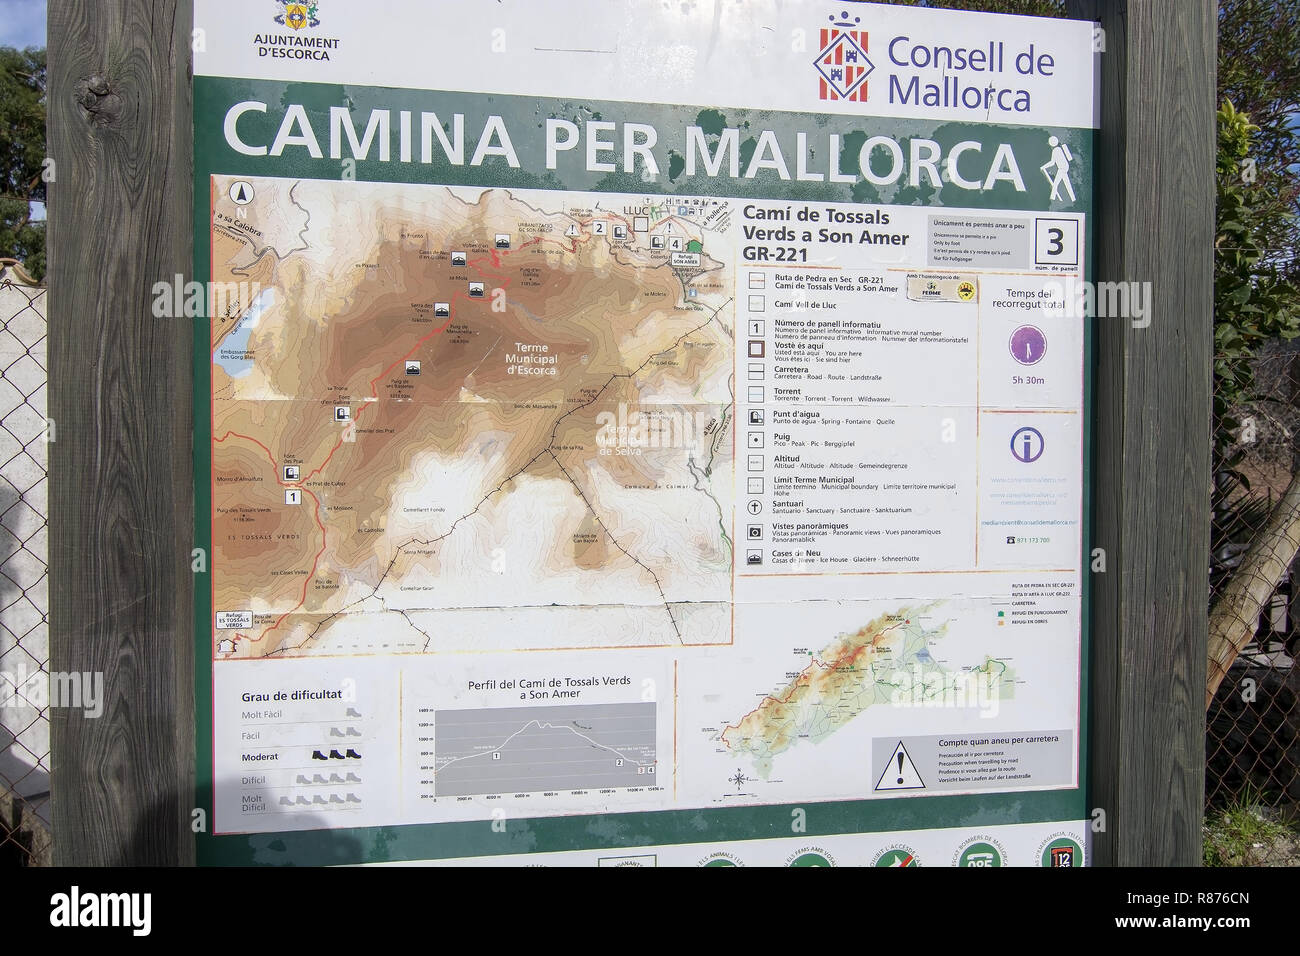 LLUC, MALLORCA, SPAIN - DECEMBER 3, 2018: Outdoor map over walking paths near Lluc on December 3, 2018 in Lluc, Mallorca, Spain. Stock Photo